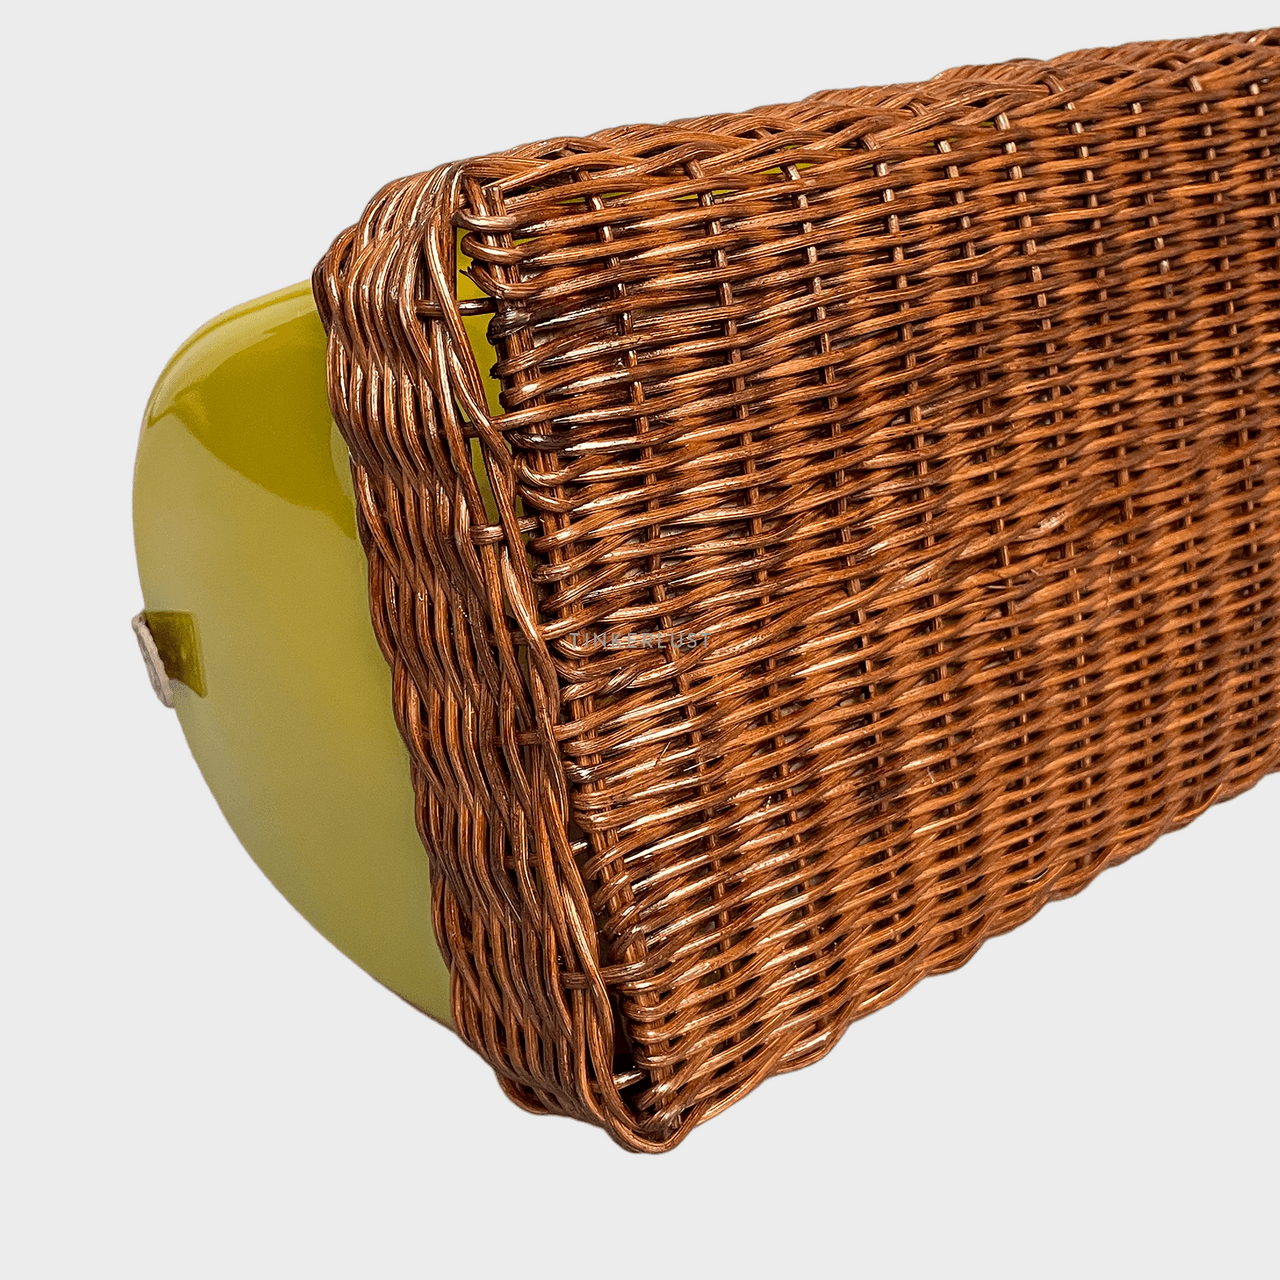 Furla Candy Rattan Olive Yellow Rubber GHW Handbag